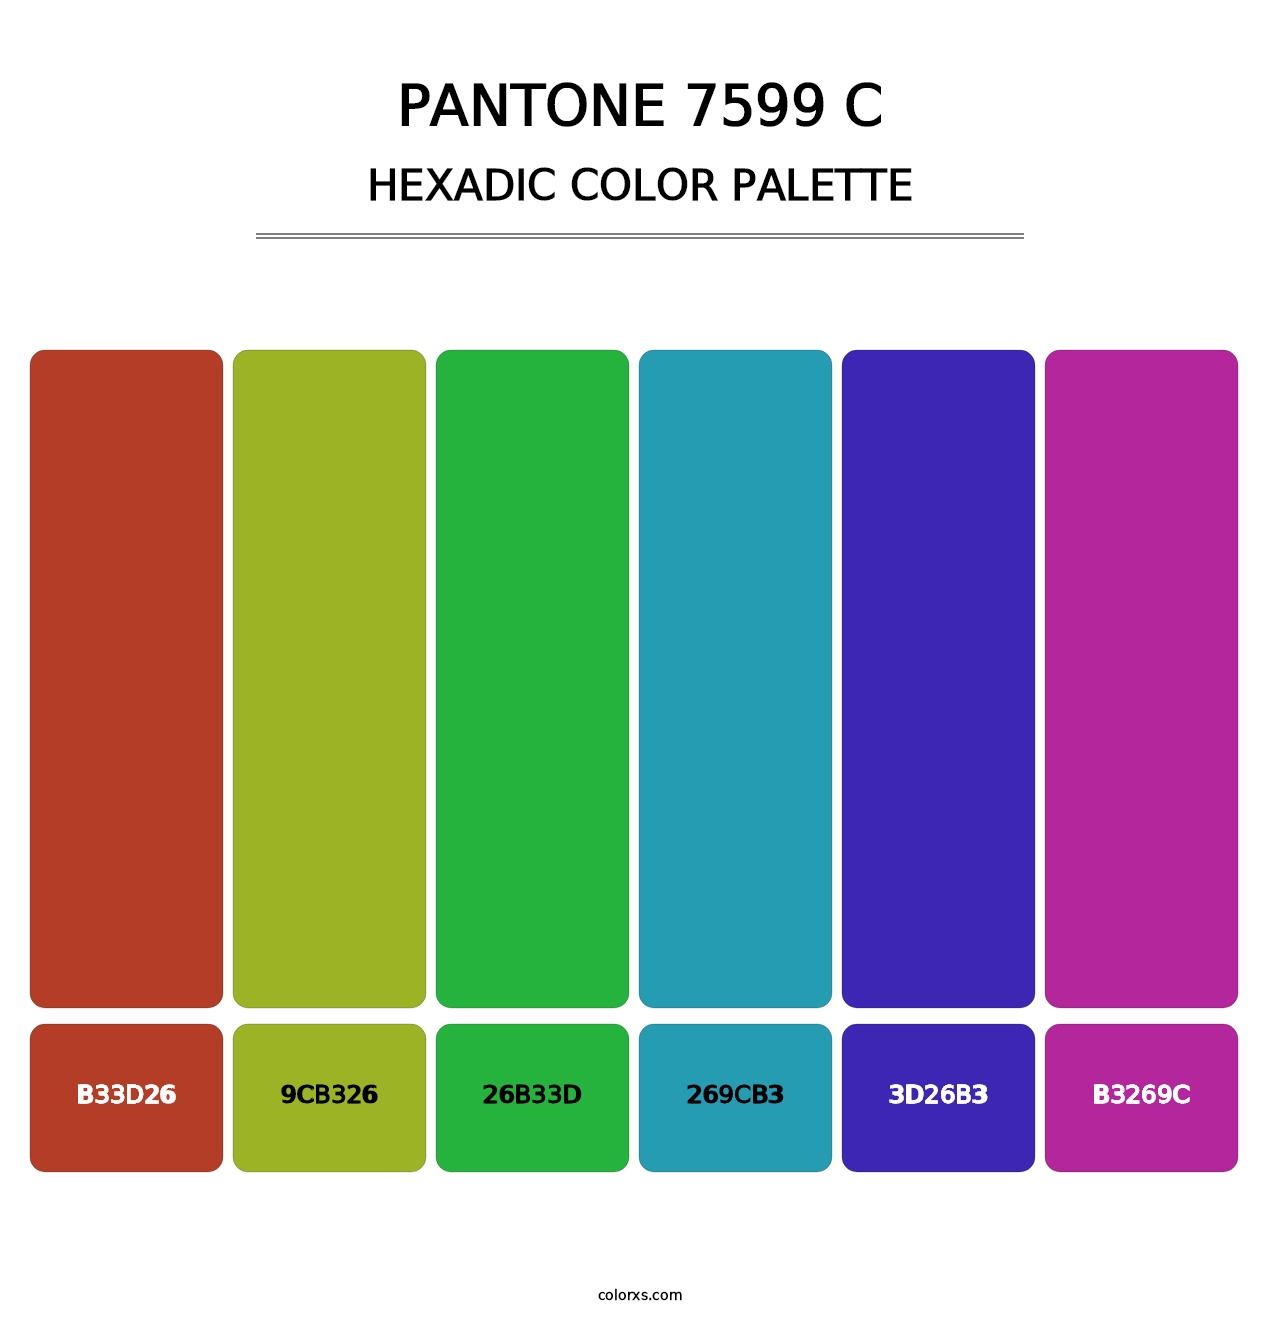 PANTONE 7599 C - Hexadic Color Palette